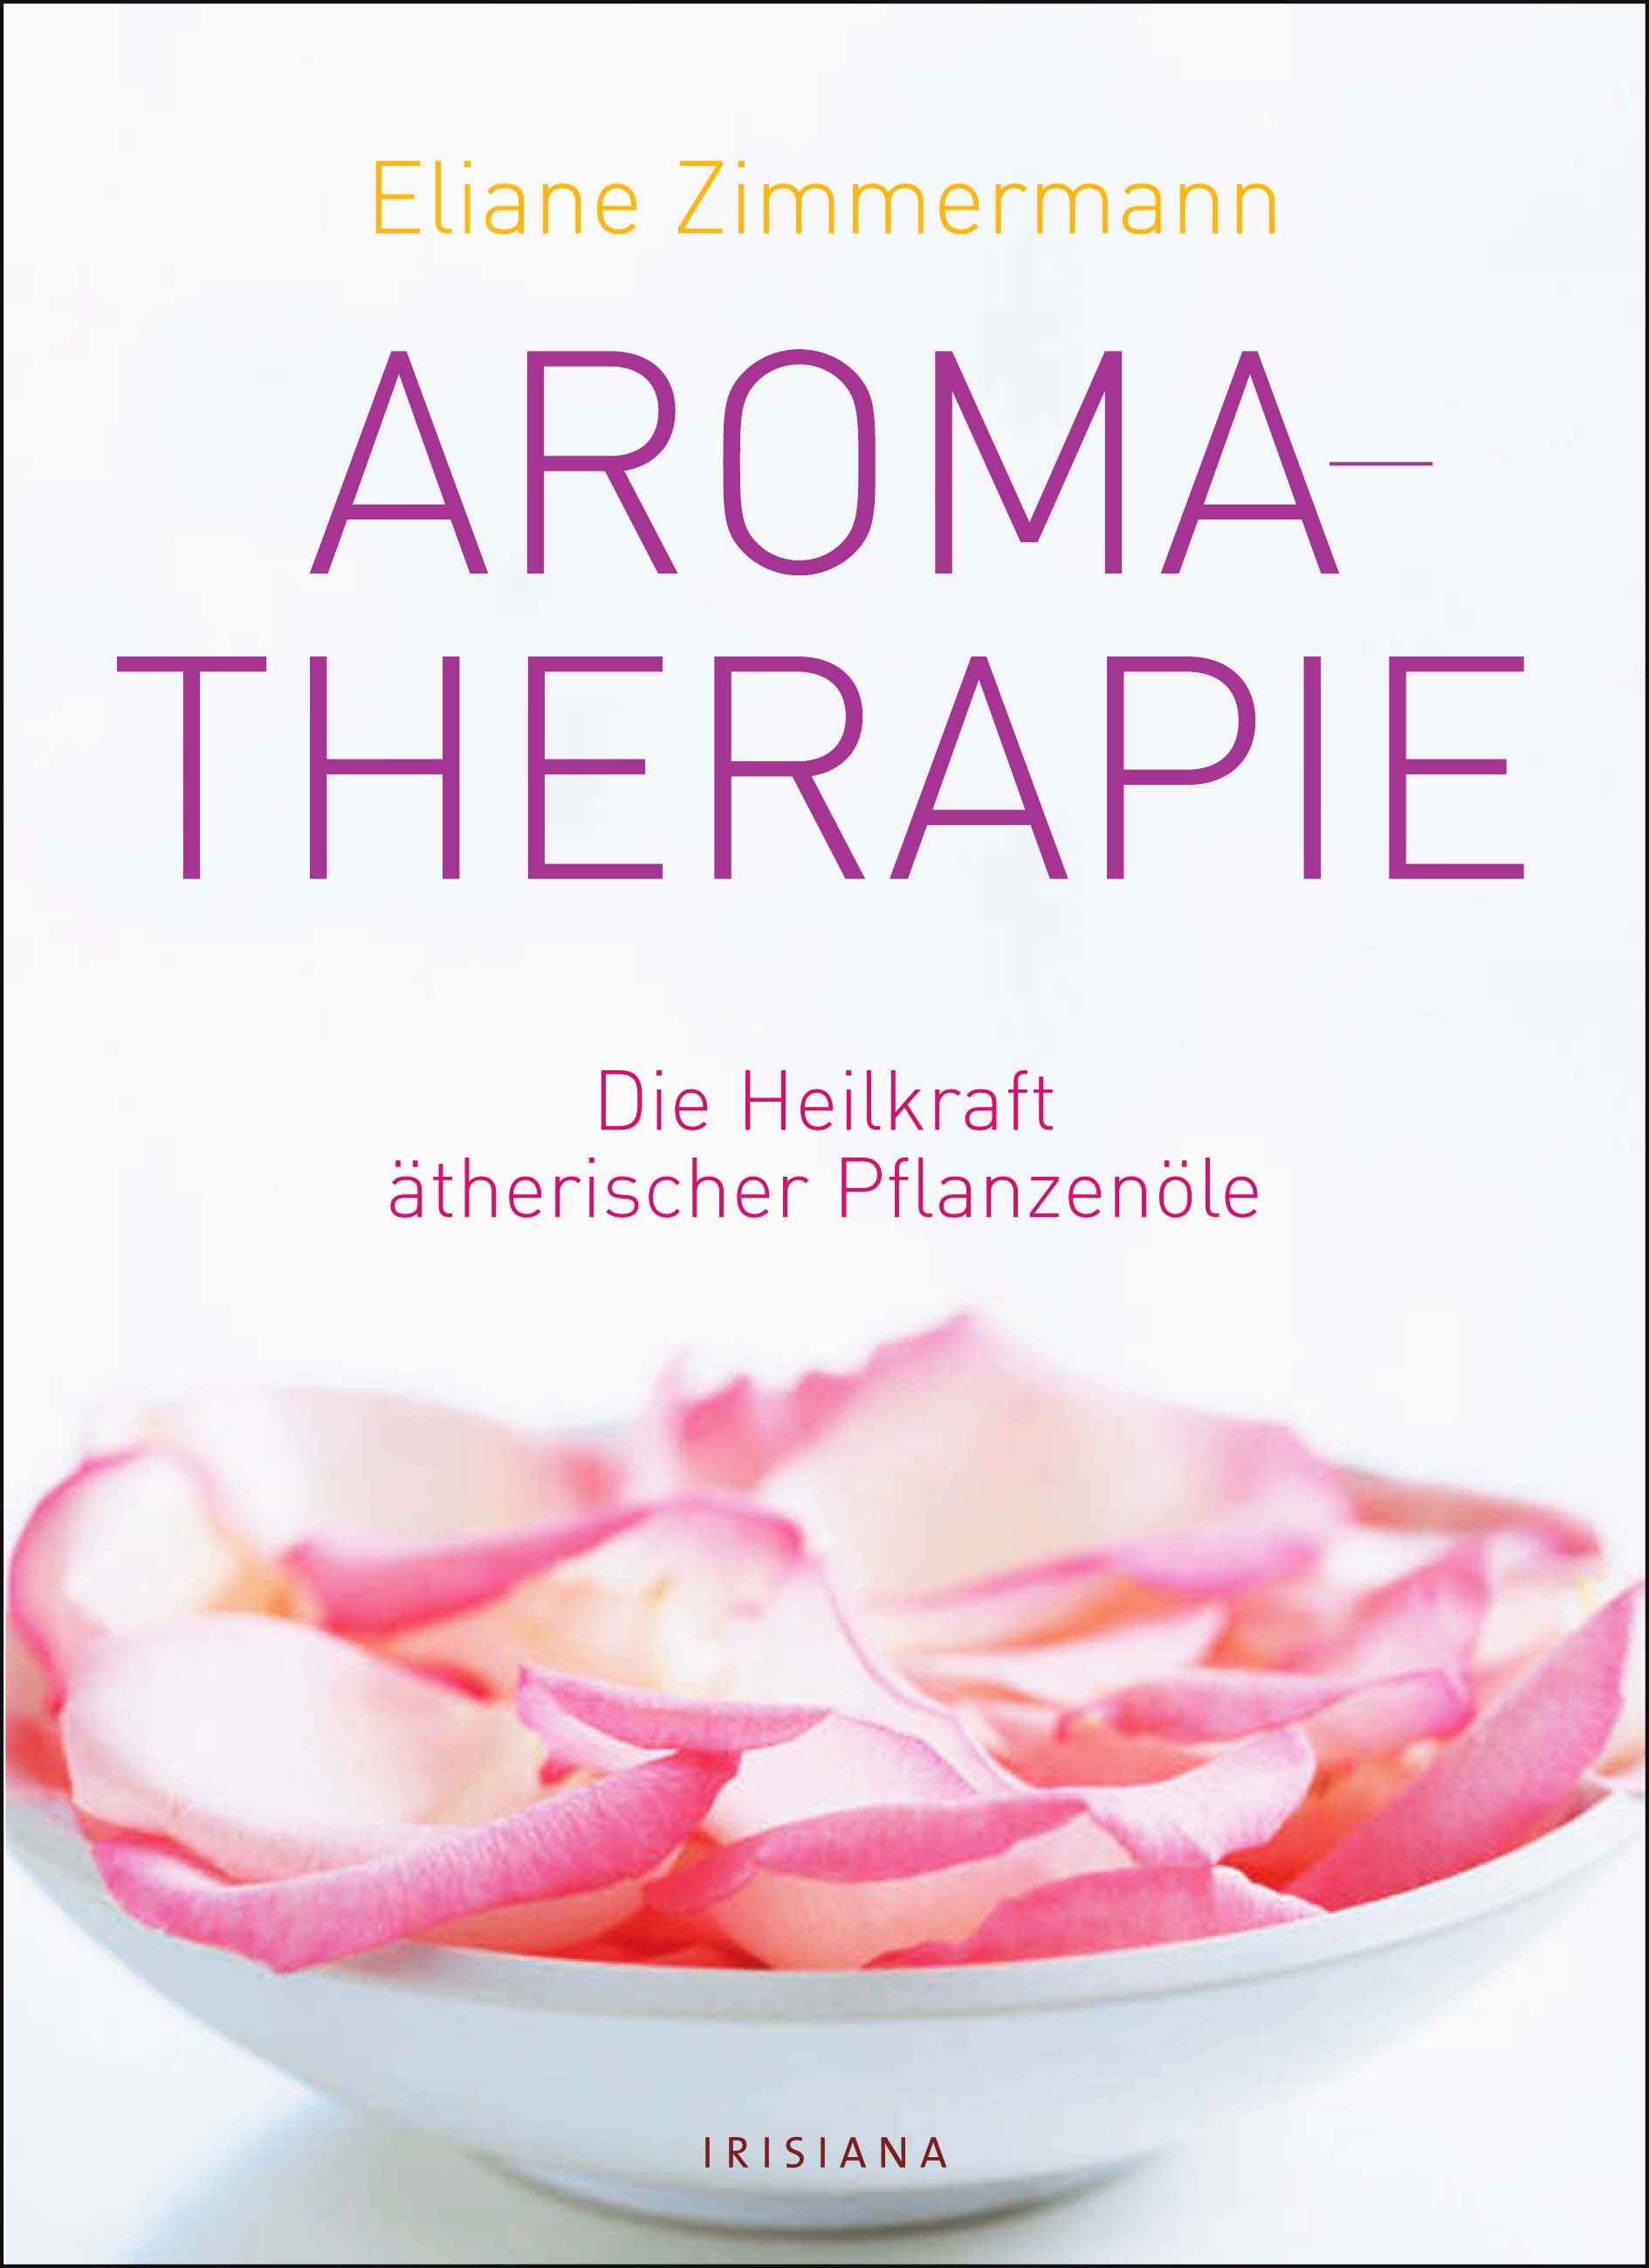 AiDA Aromatherapy